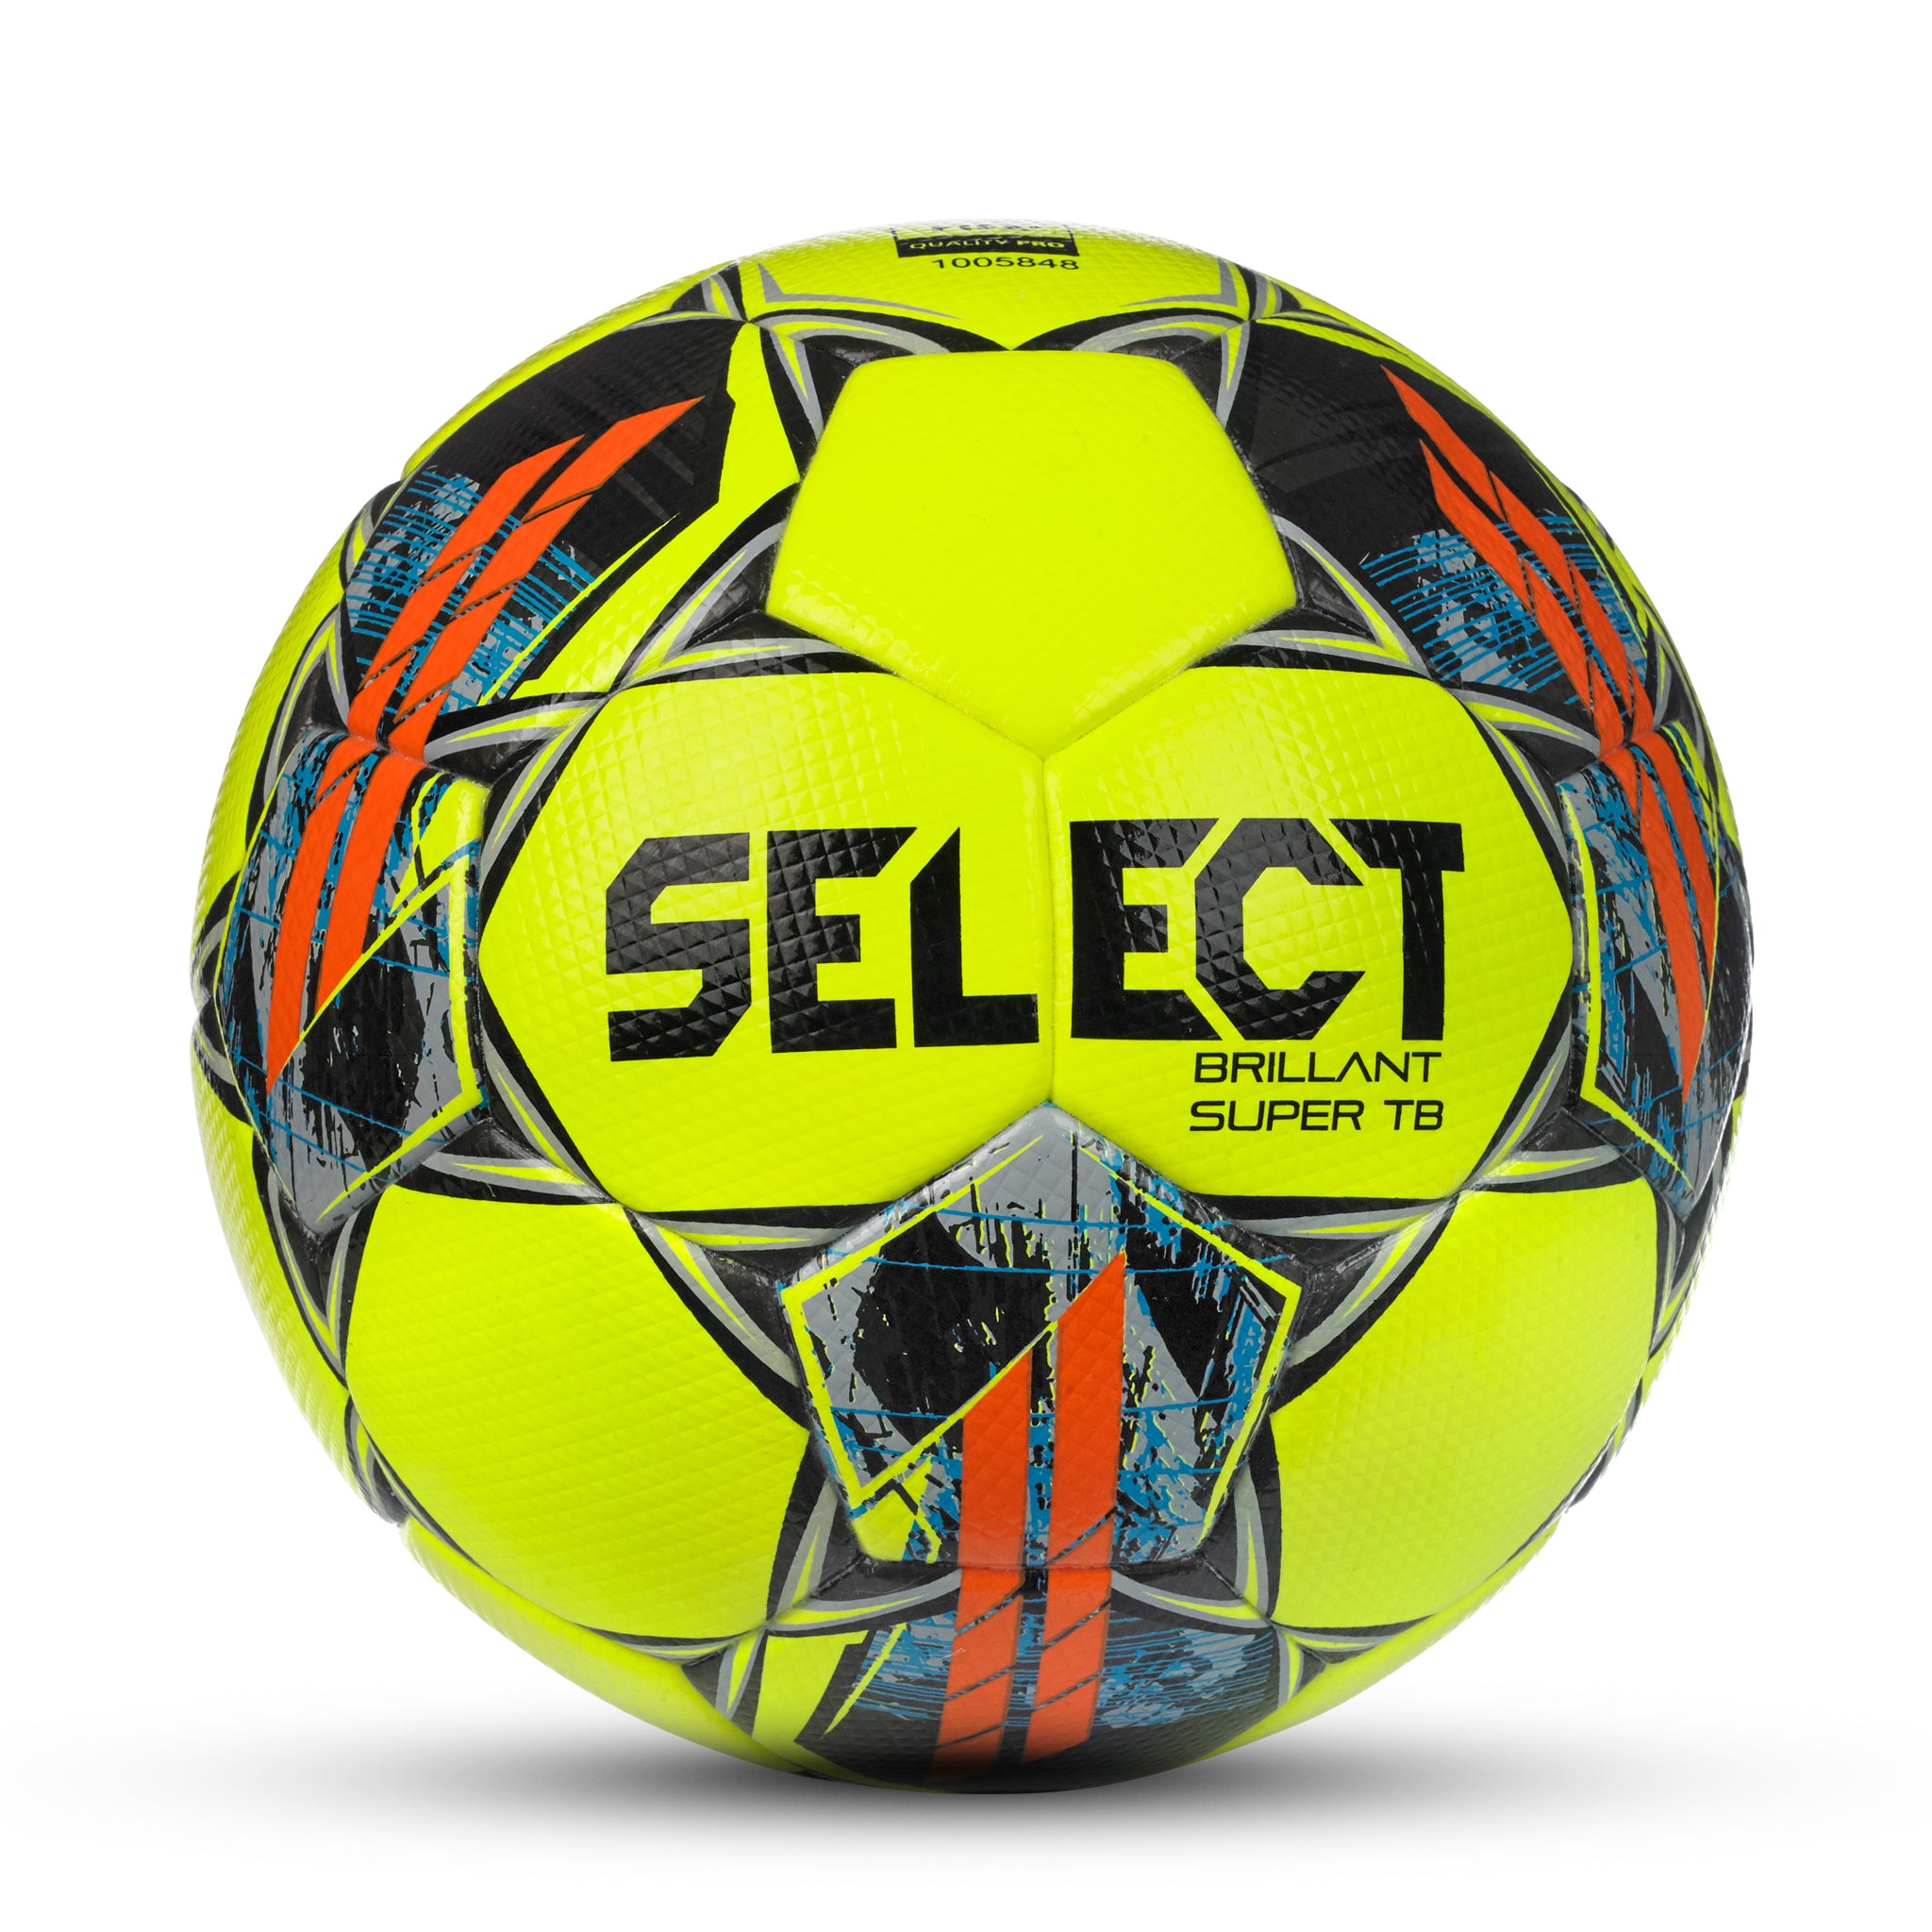 White professional soccer ball #color_yellow/orange